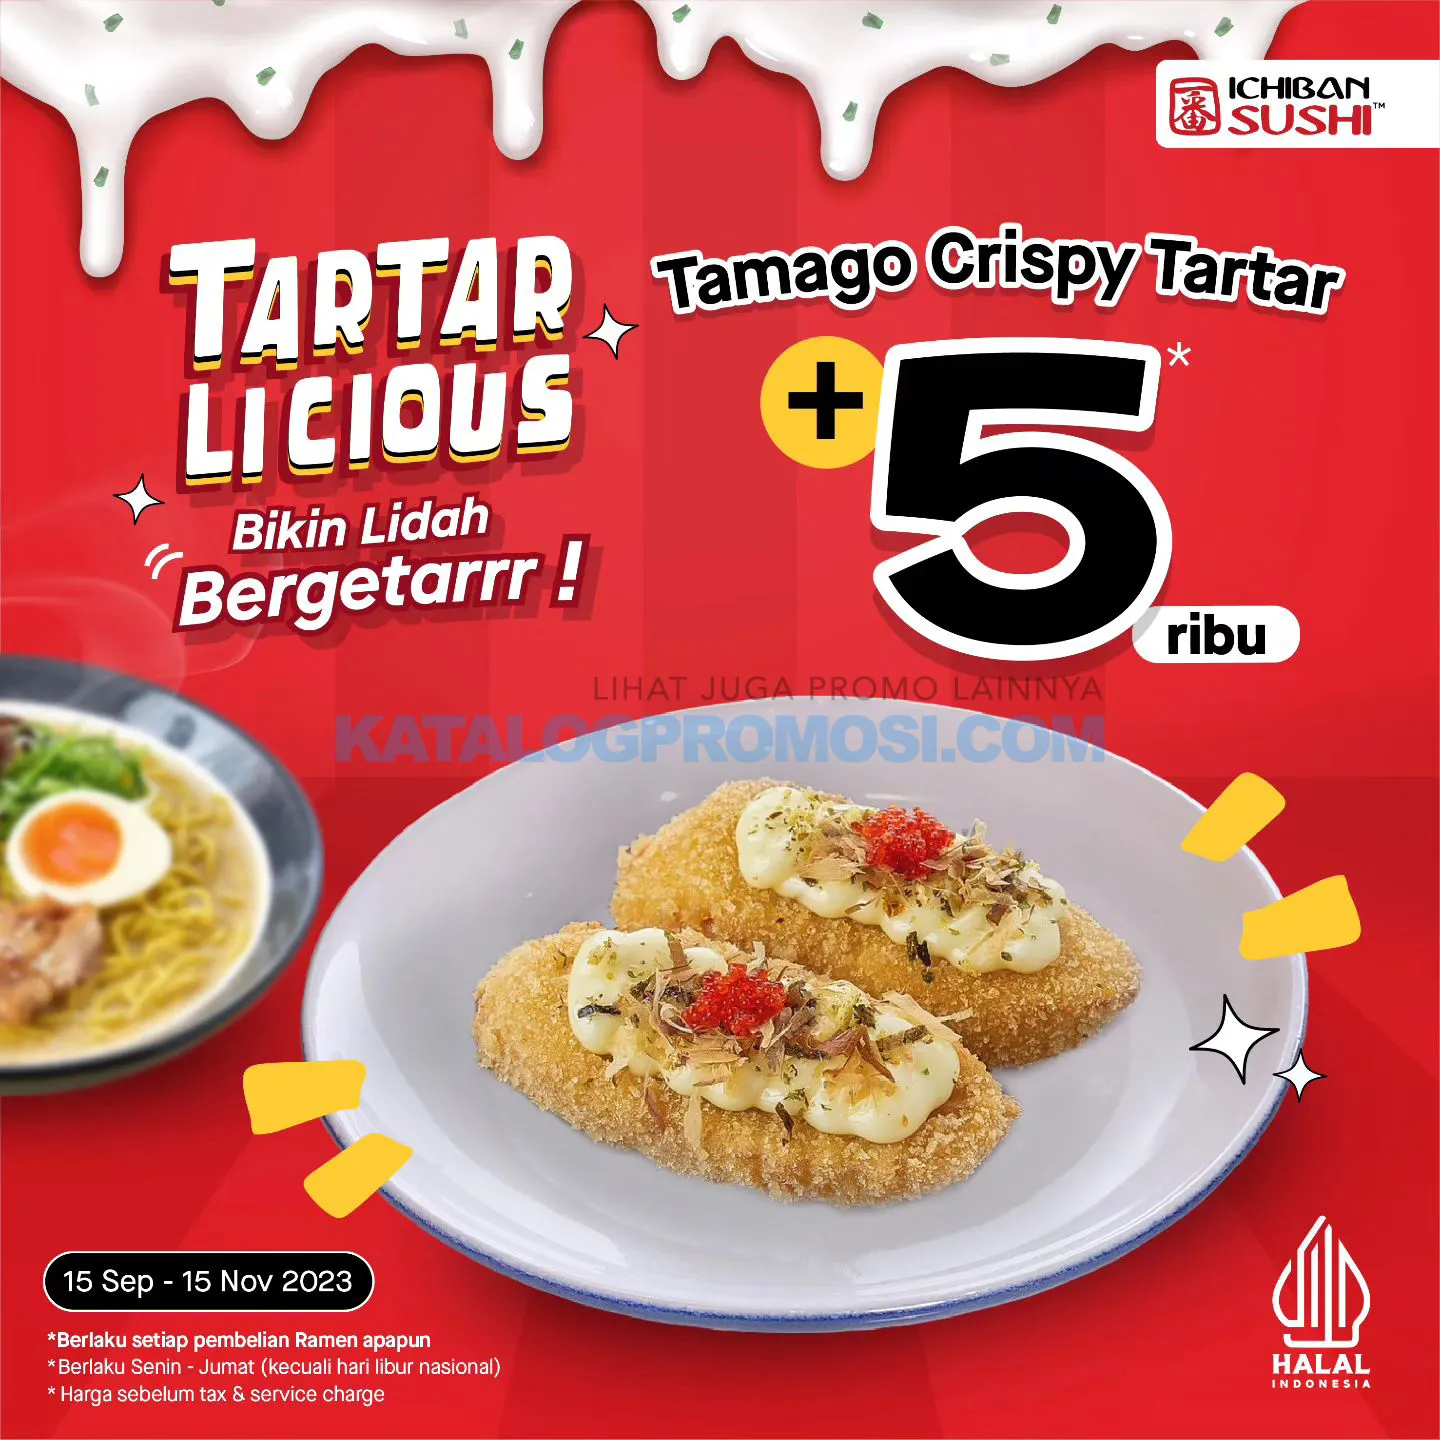 Promo ICHIBAN SUSHI BELI Tamago Crispy Tartar cuma tambah + Rp. 5.000